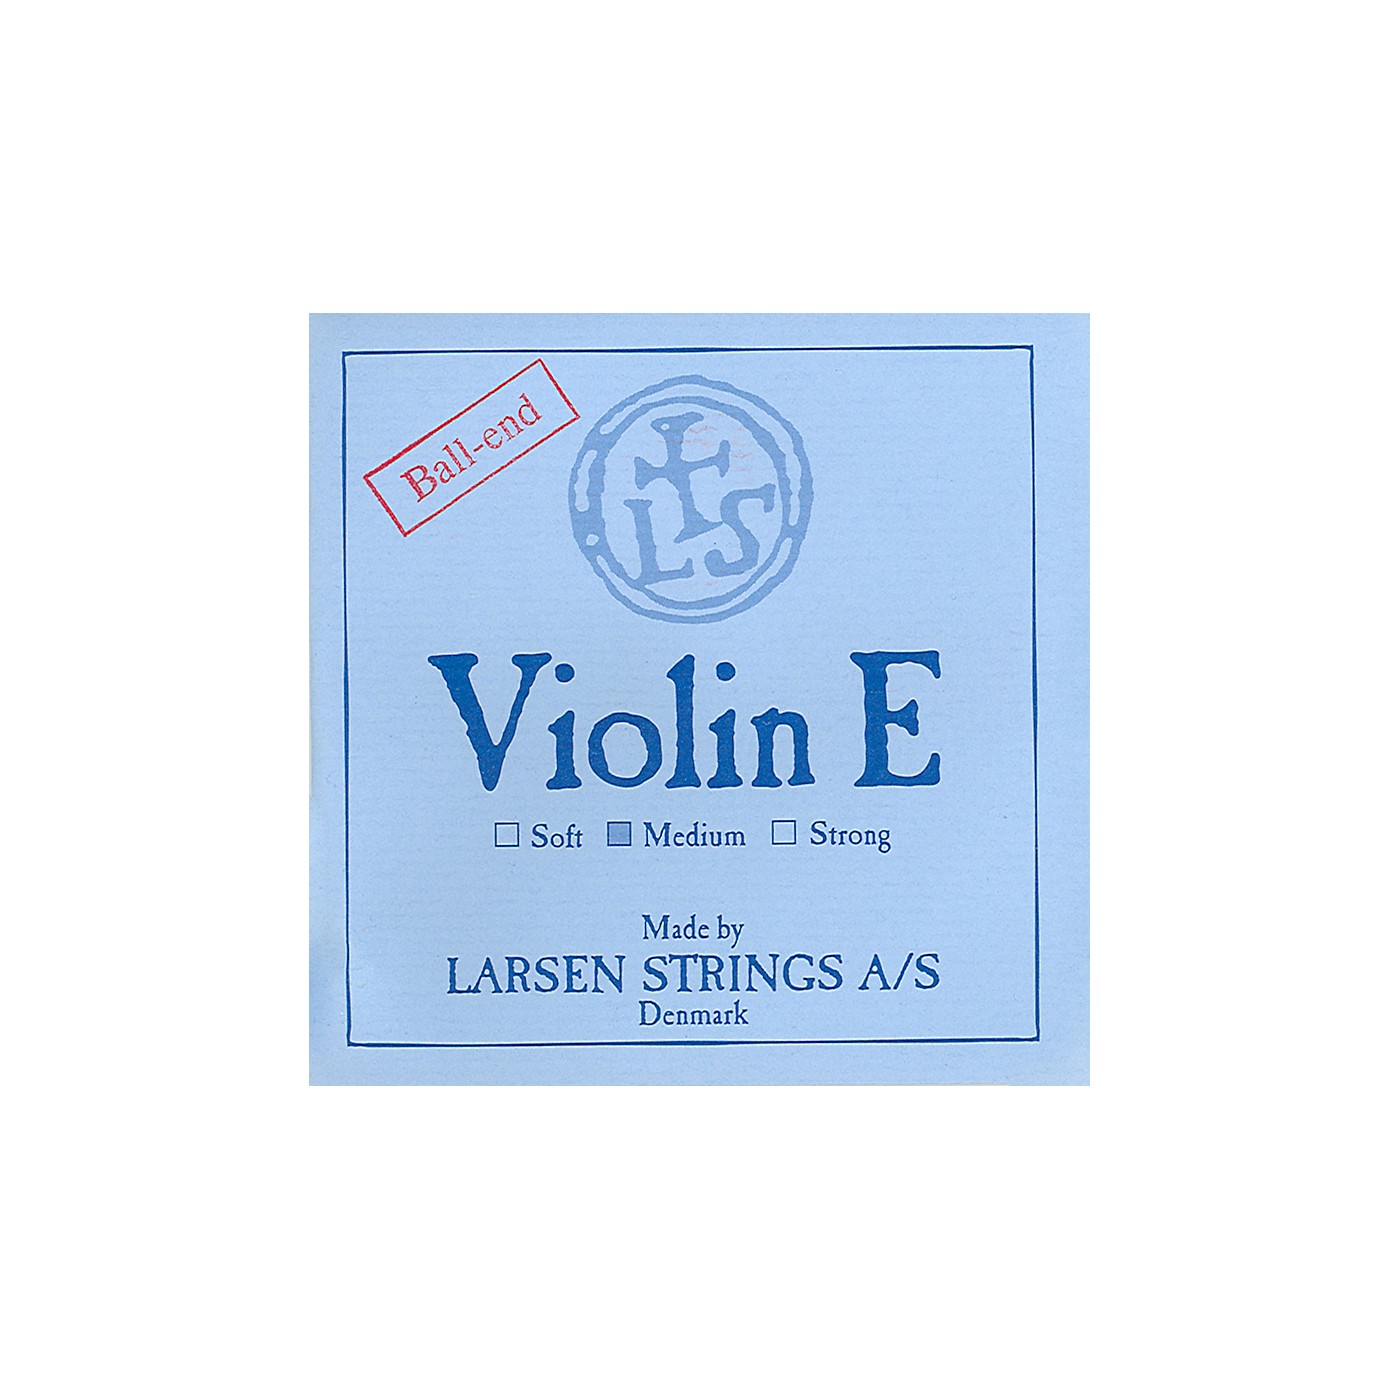 Larsen Strings Violin Strings thumbnail